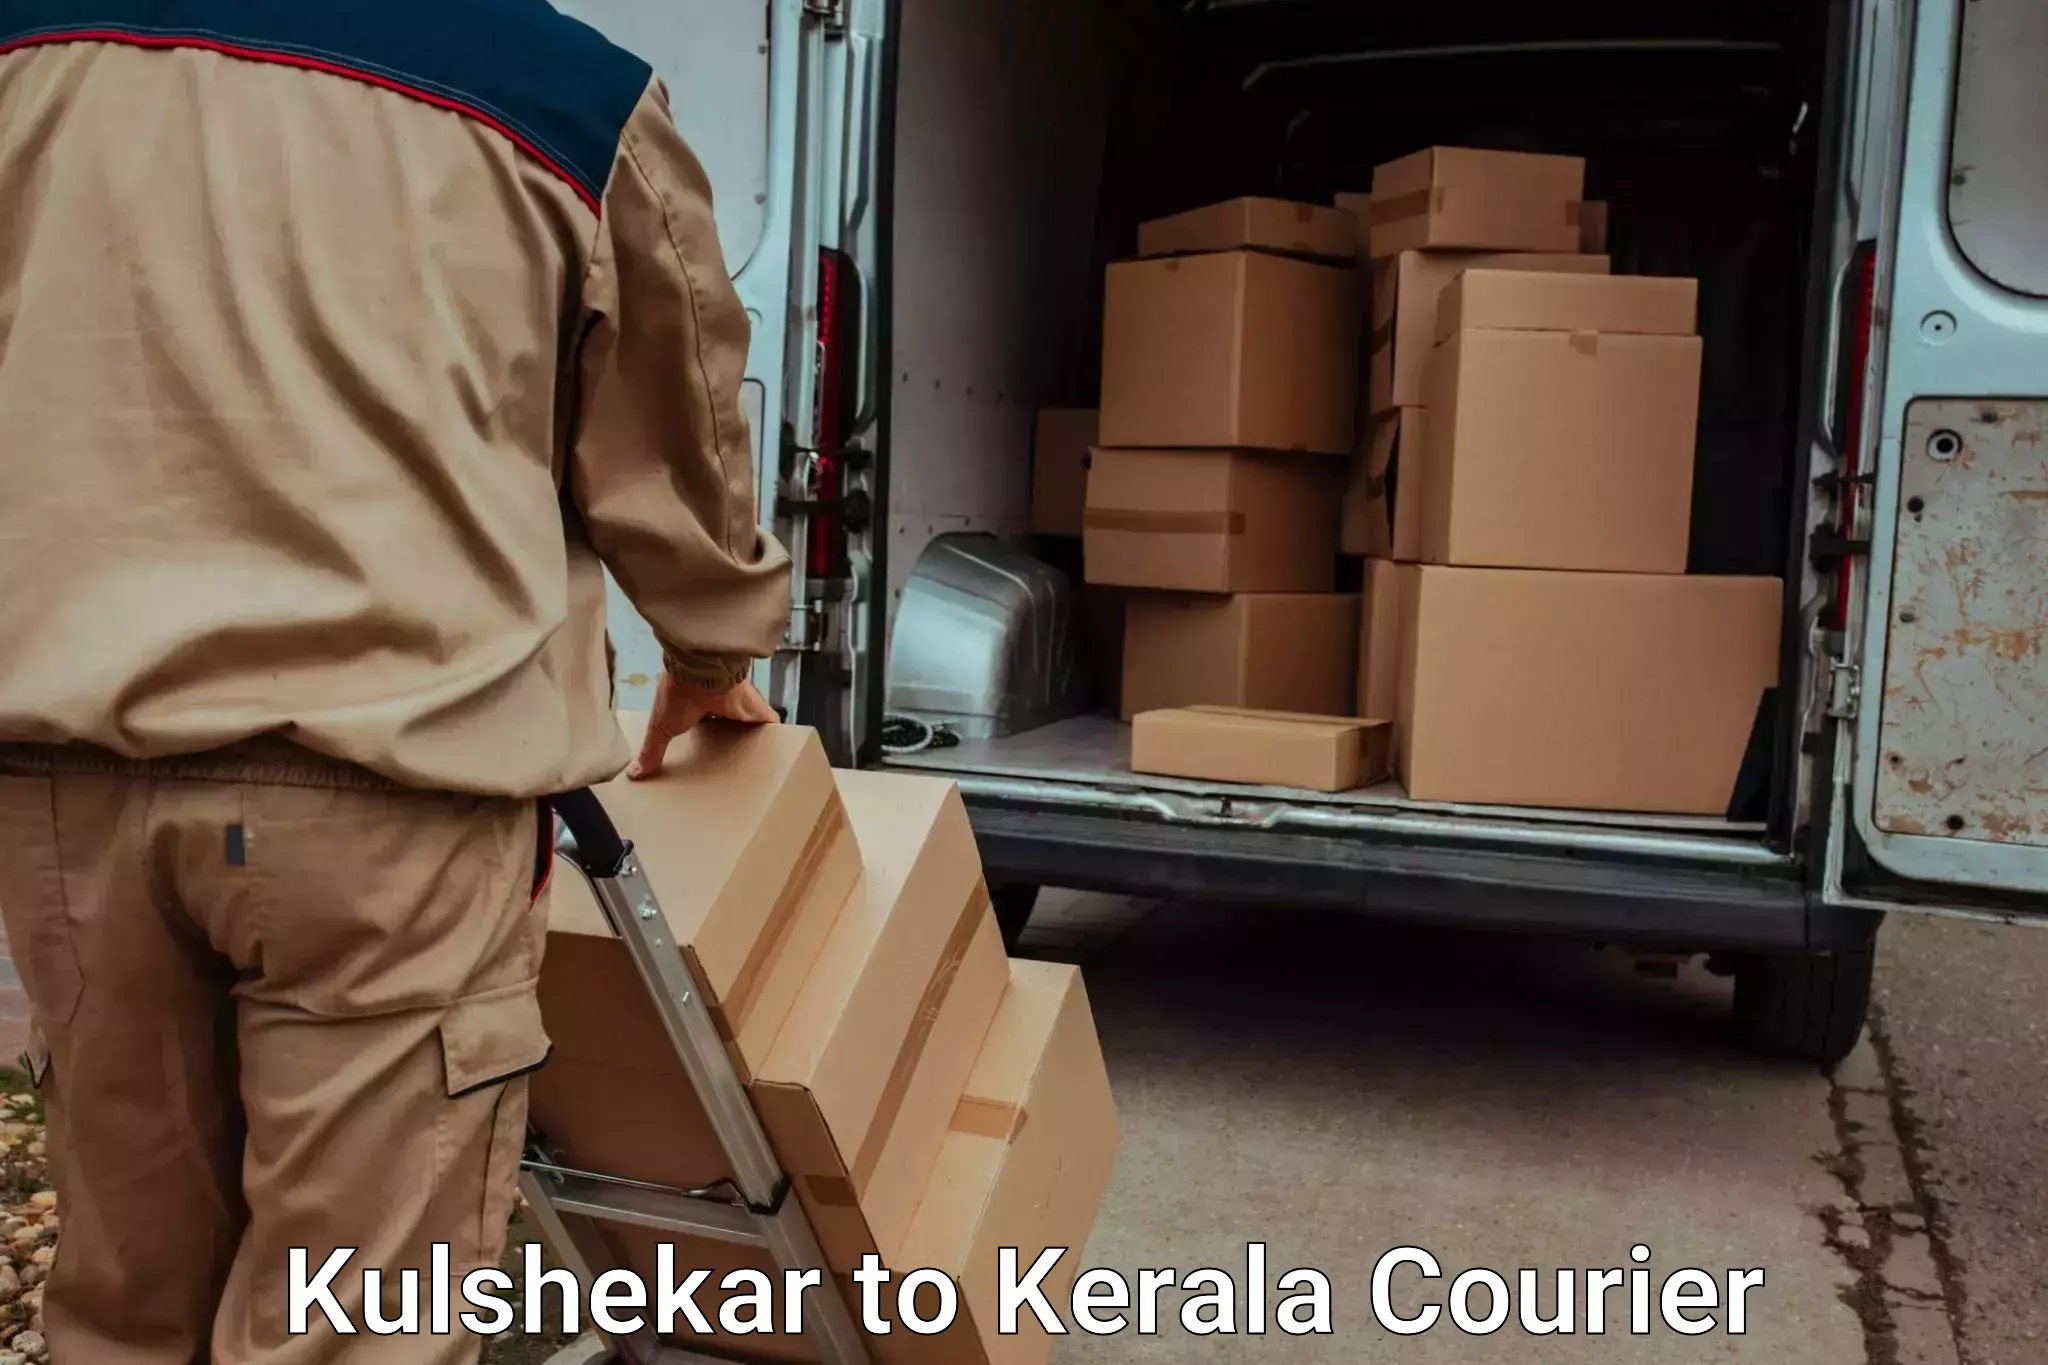 Baggage relocation service Kulshekar to Pangodu